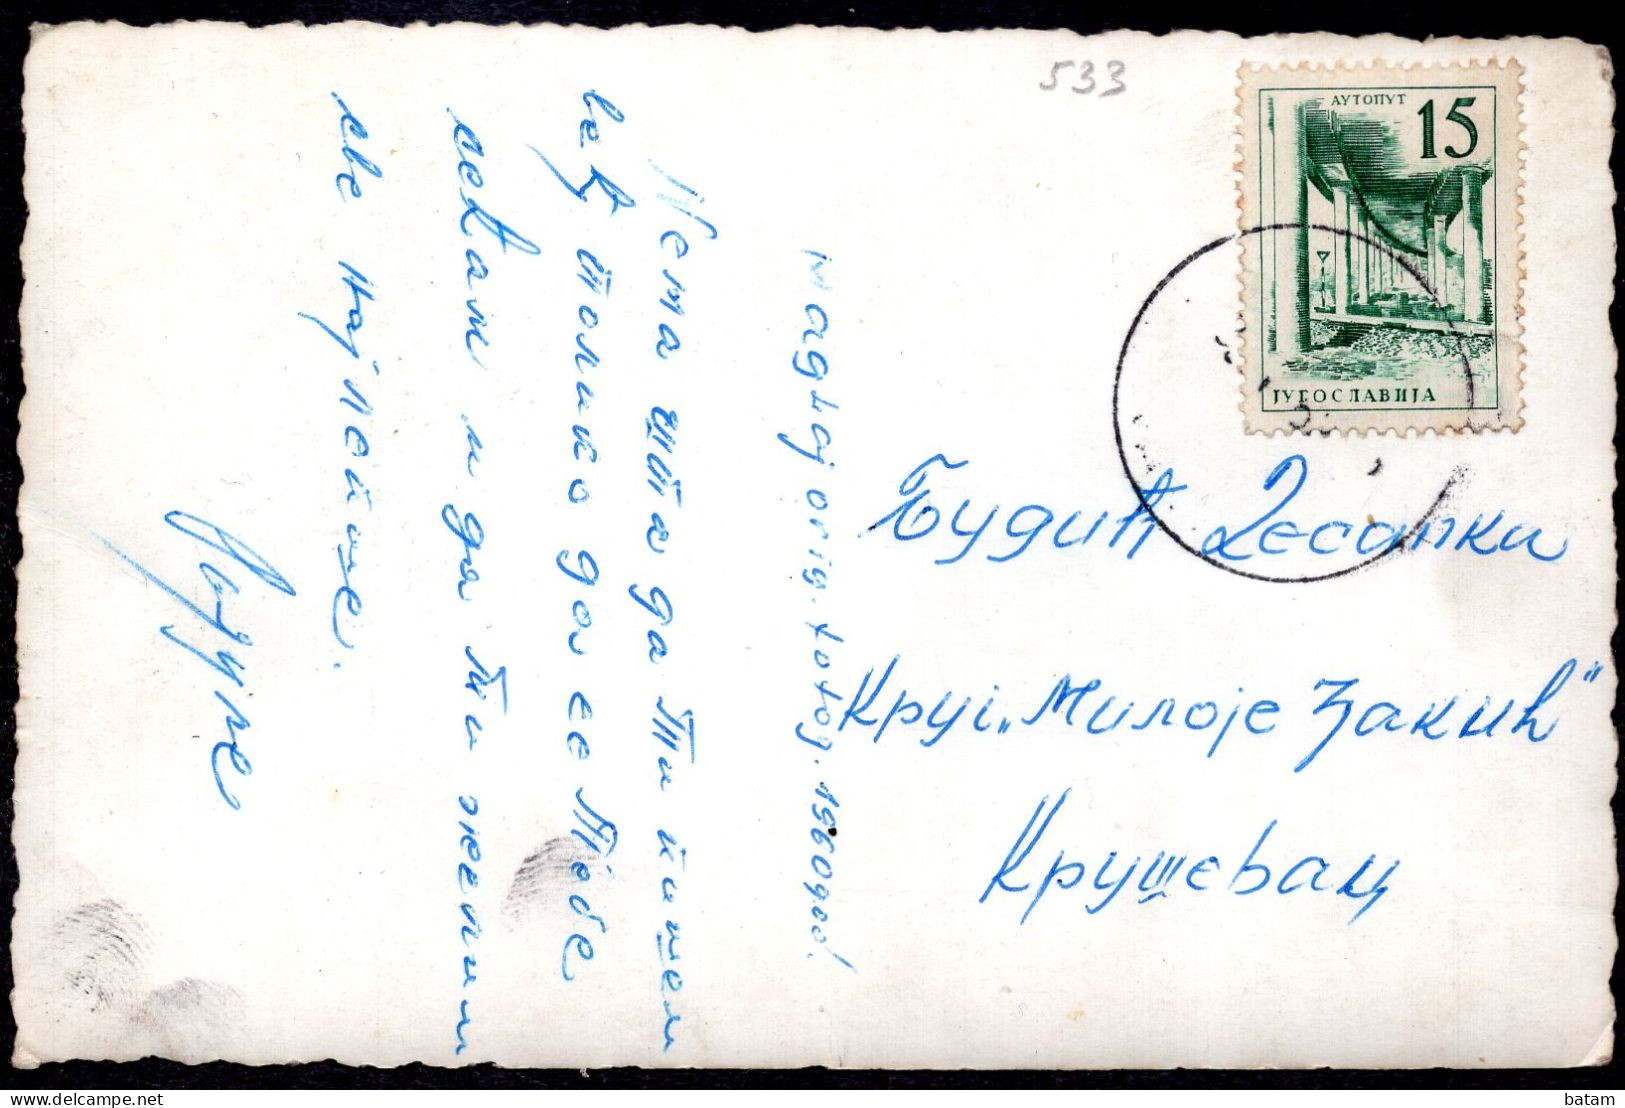 533 - Bosnia And Herzegovina - Maglaj 1960 - Postcard - Bosnia And Herzegovina